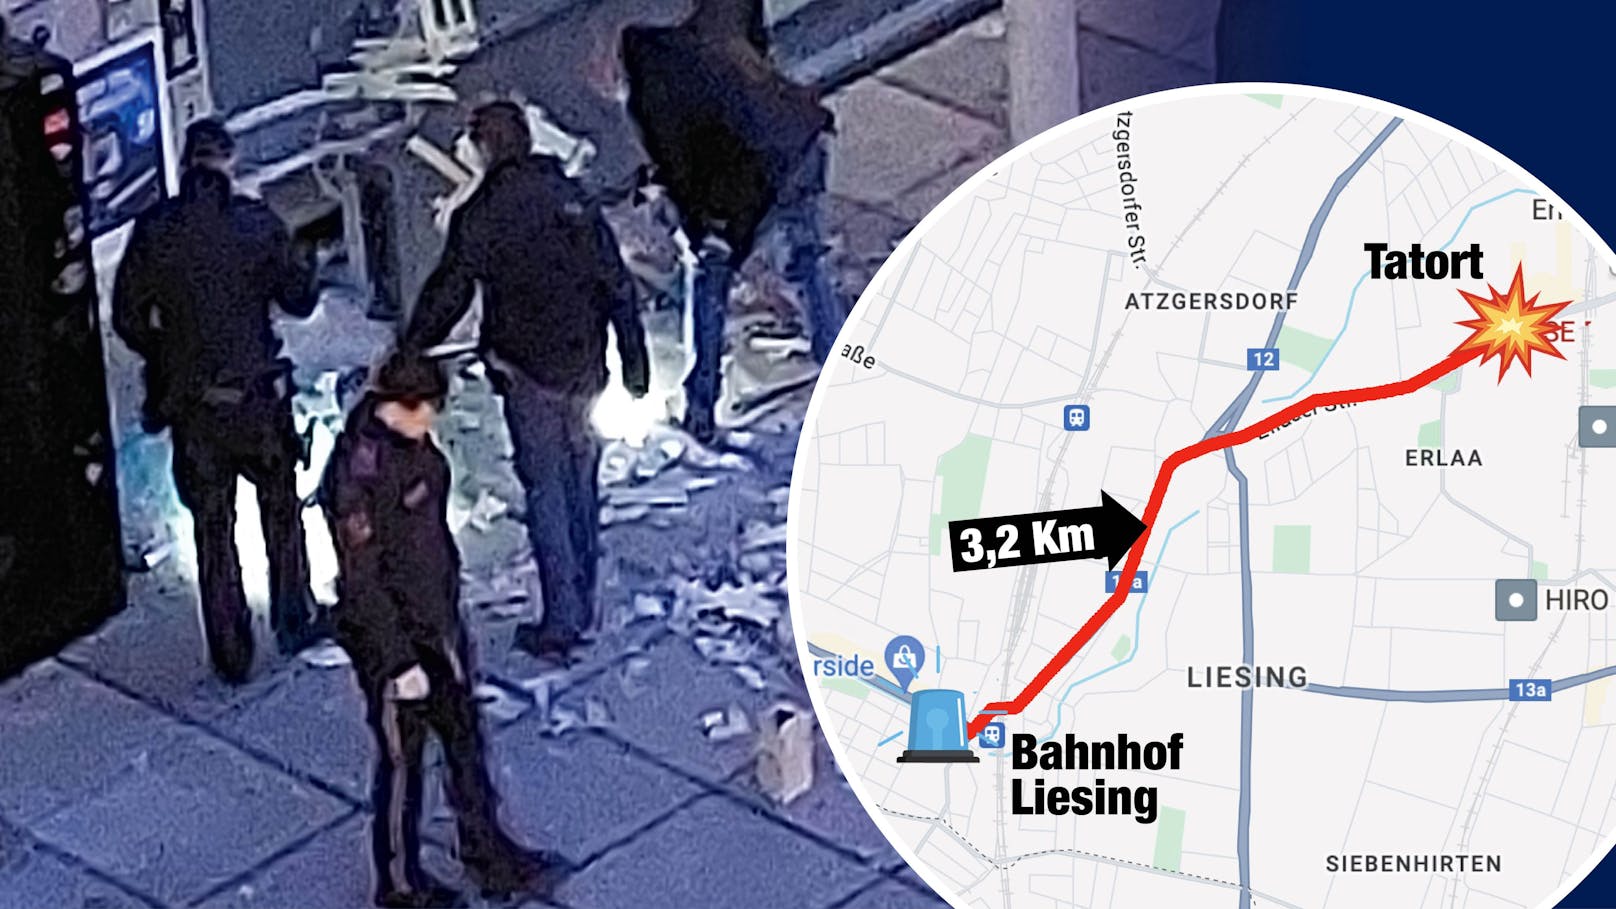 Tschick-Coup in Wien wenige Meter vor Polizeiinspektion